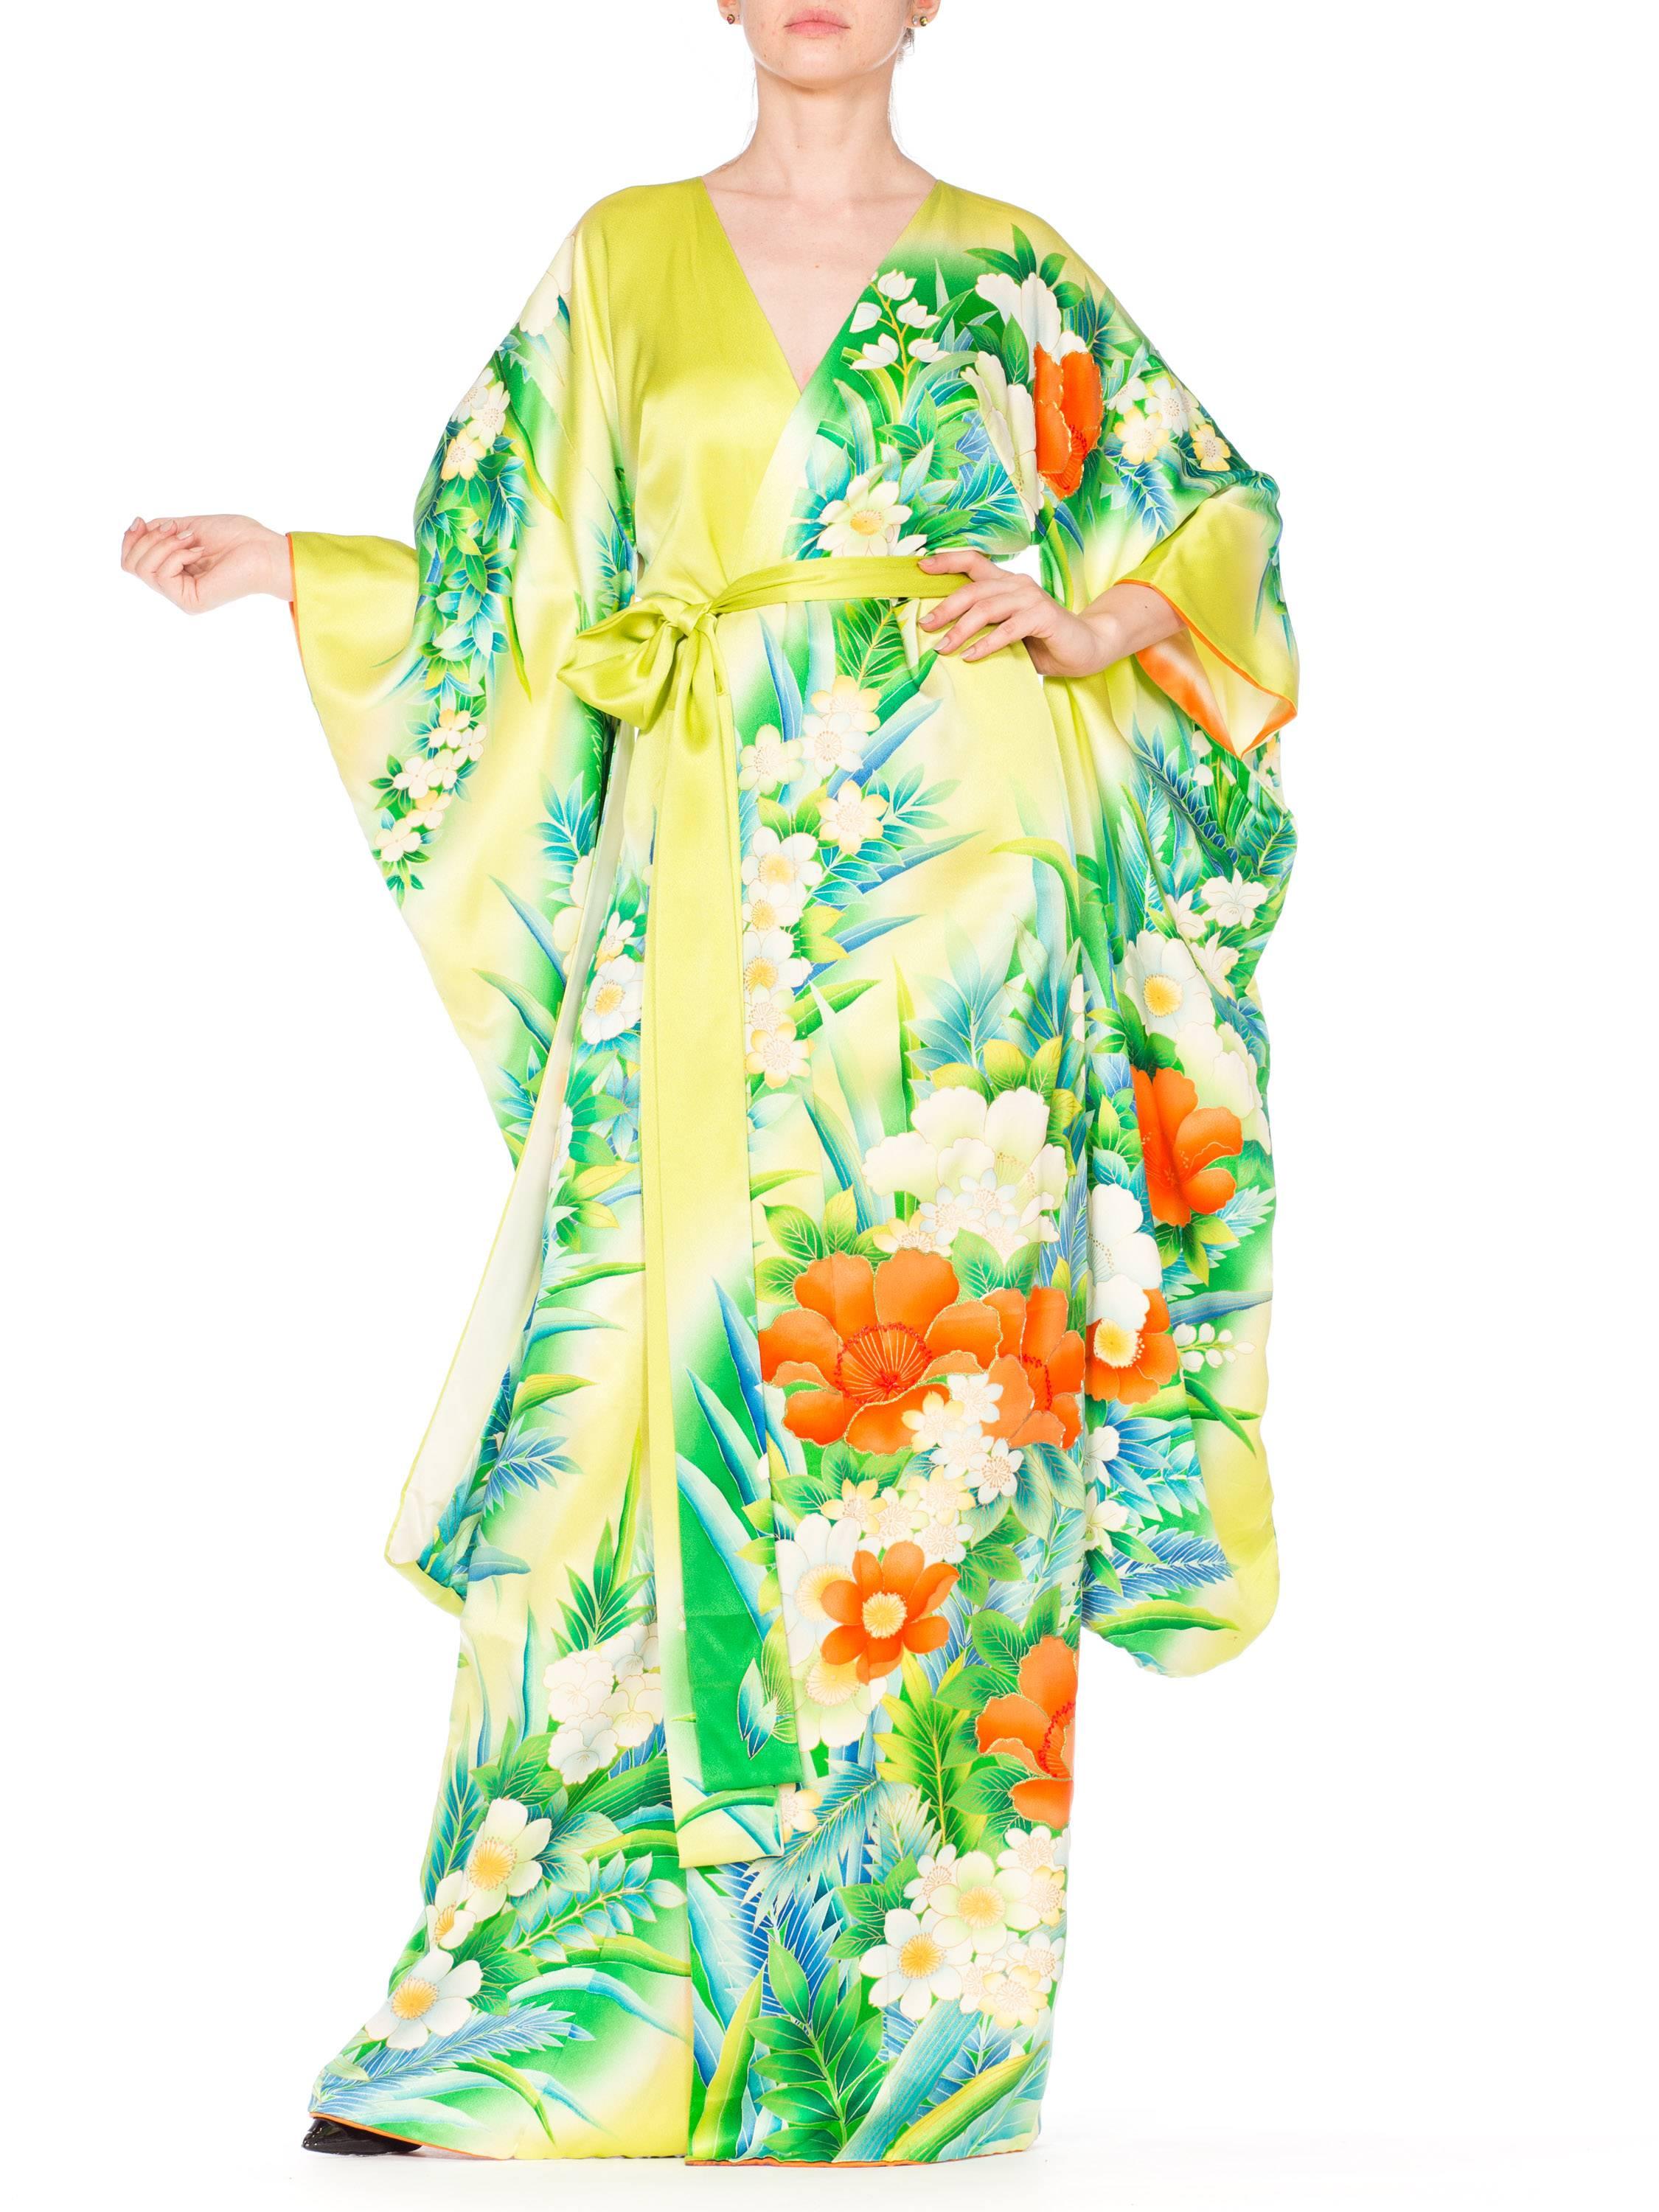 Morphew Collection Tropical Hand Painted Japanese Kimono Dress 2